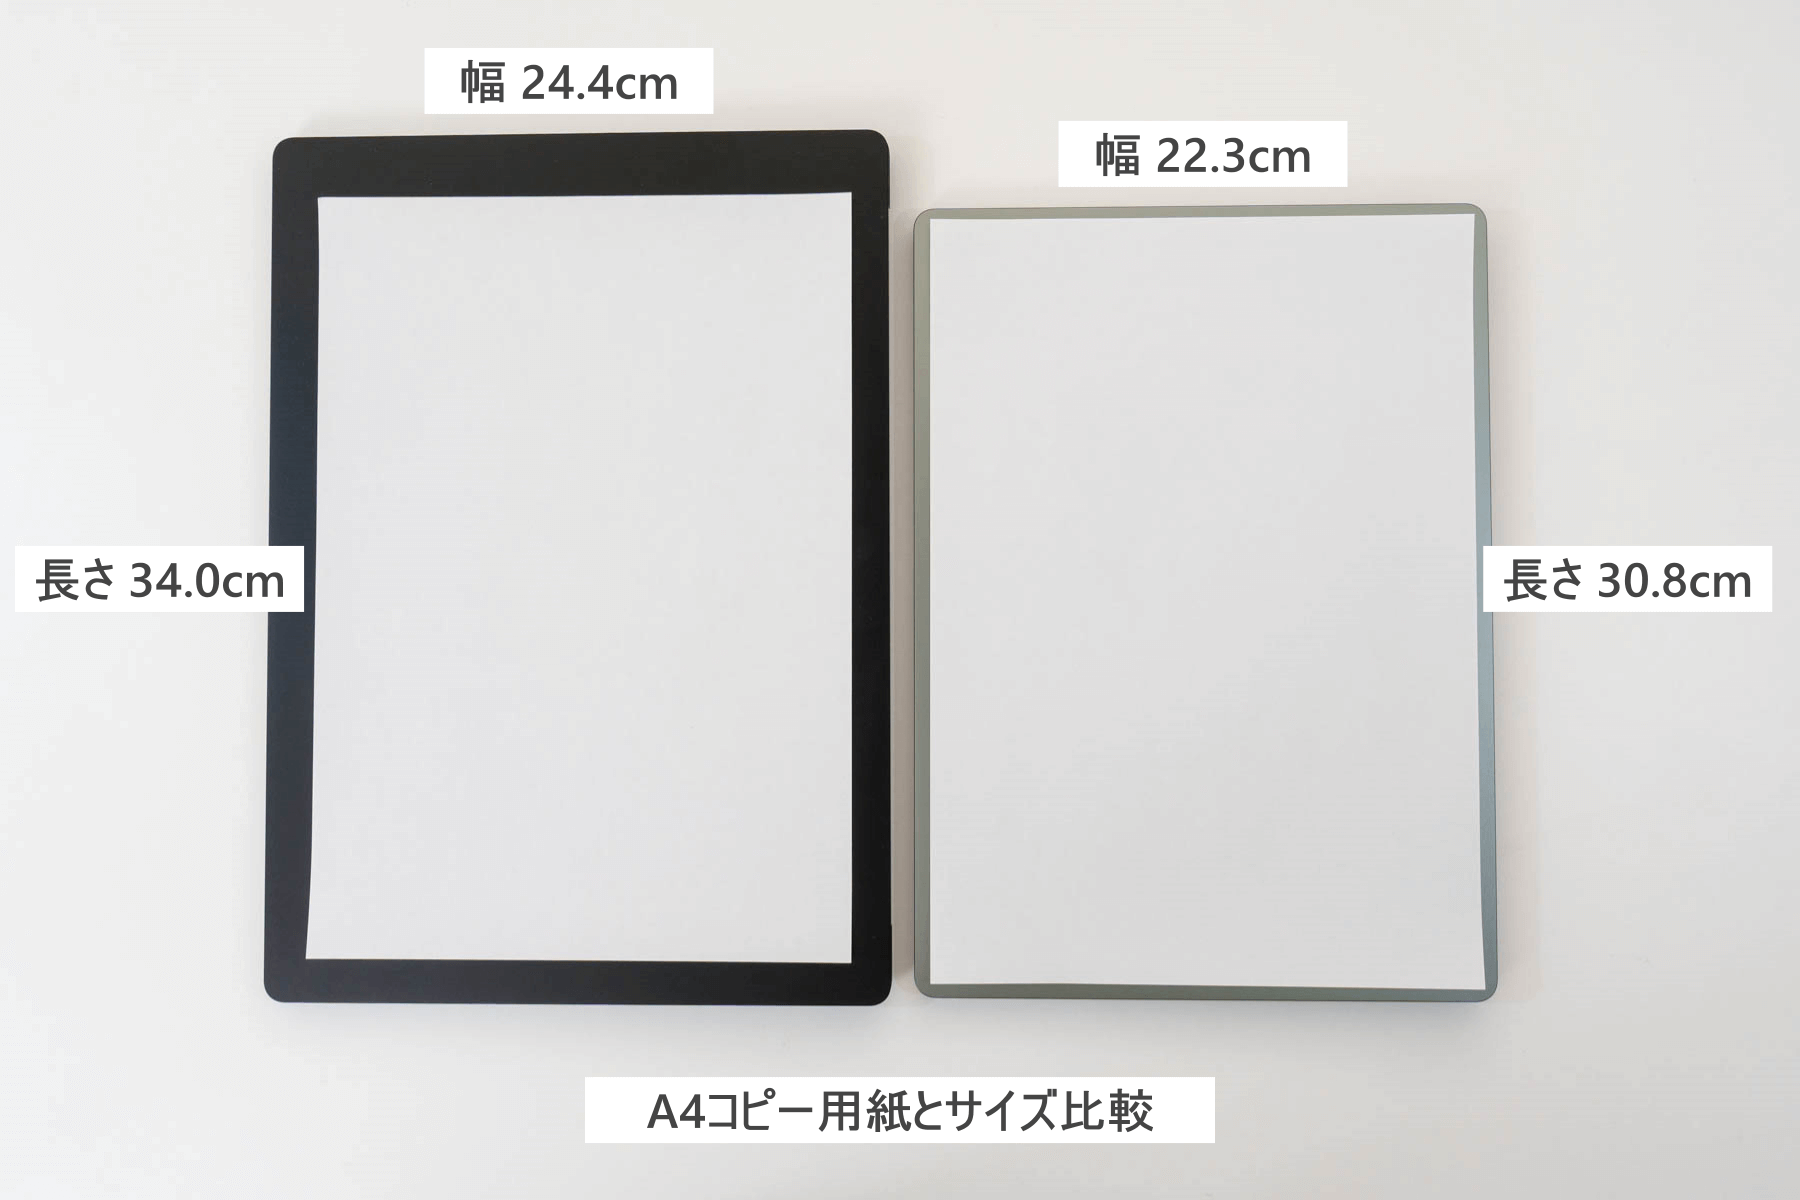 Surface Laptop 5 のサイズ A4用紙と比較する